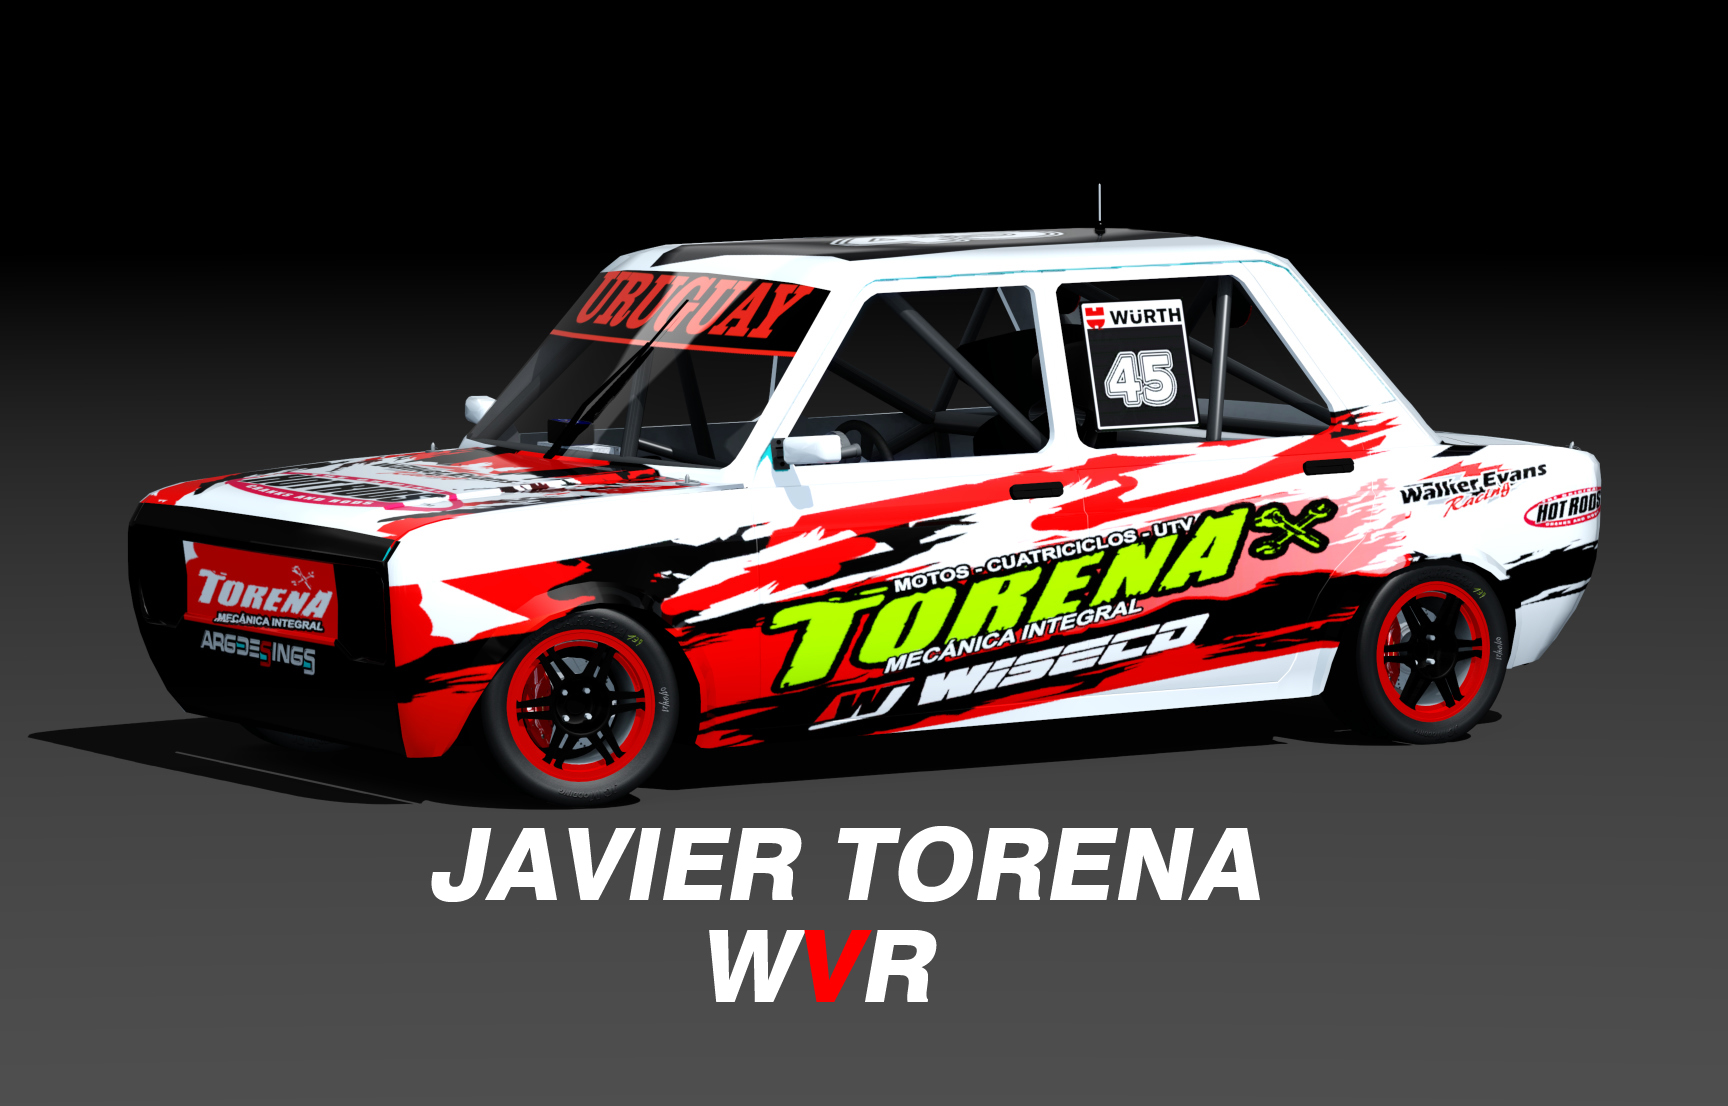 WVR Turismo 1.4 FIAT 128, skin javier torena